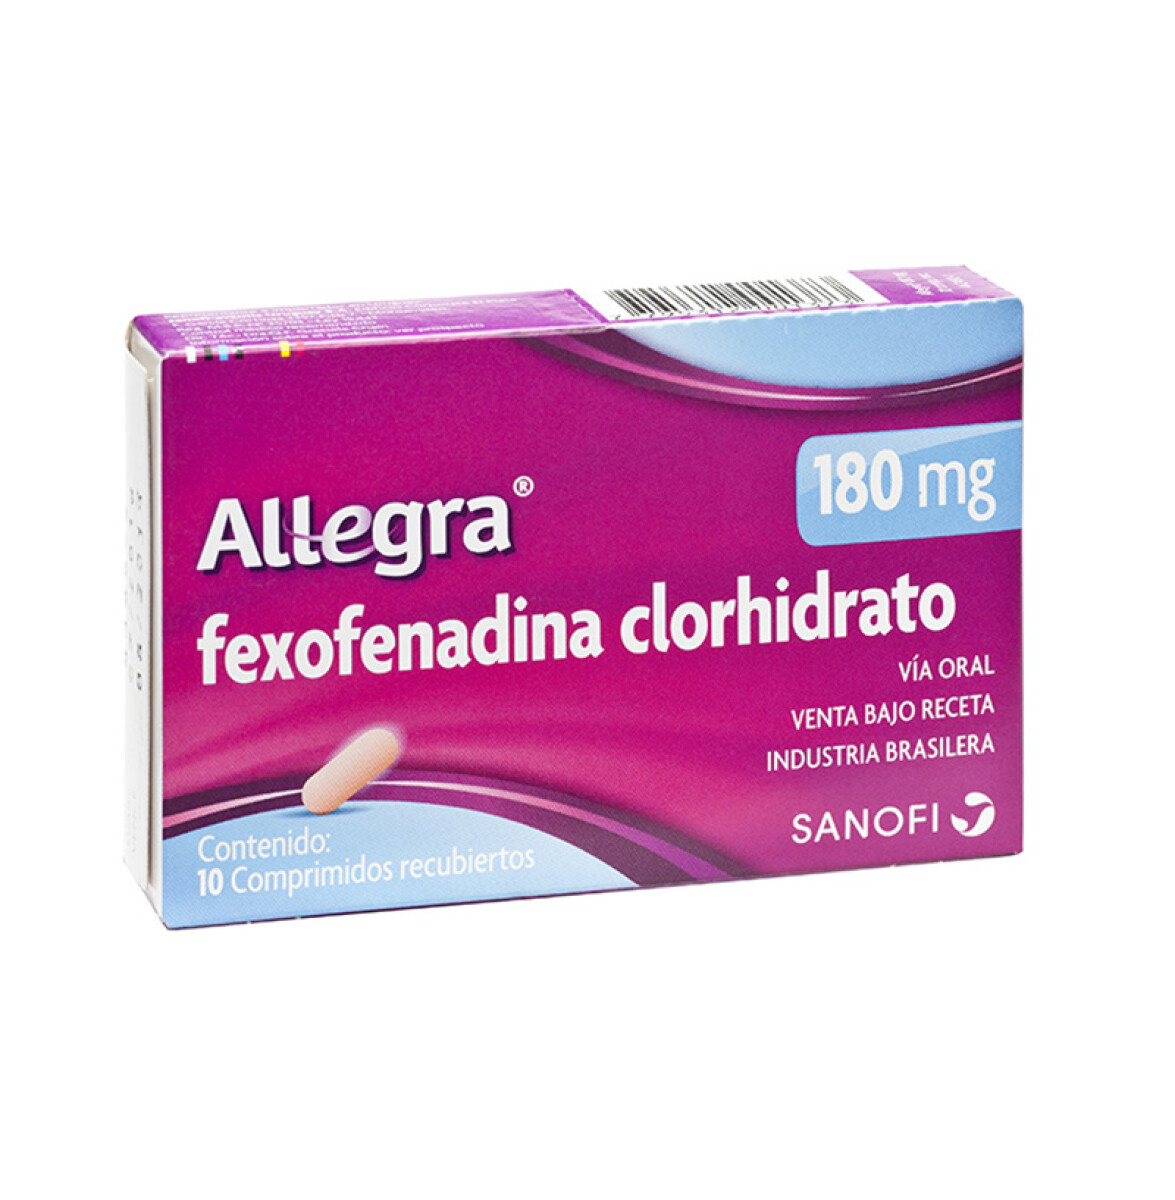 Allegra antialérgico - 180 mg 